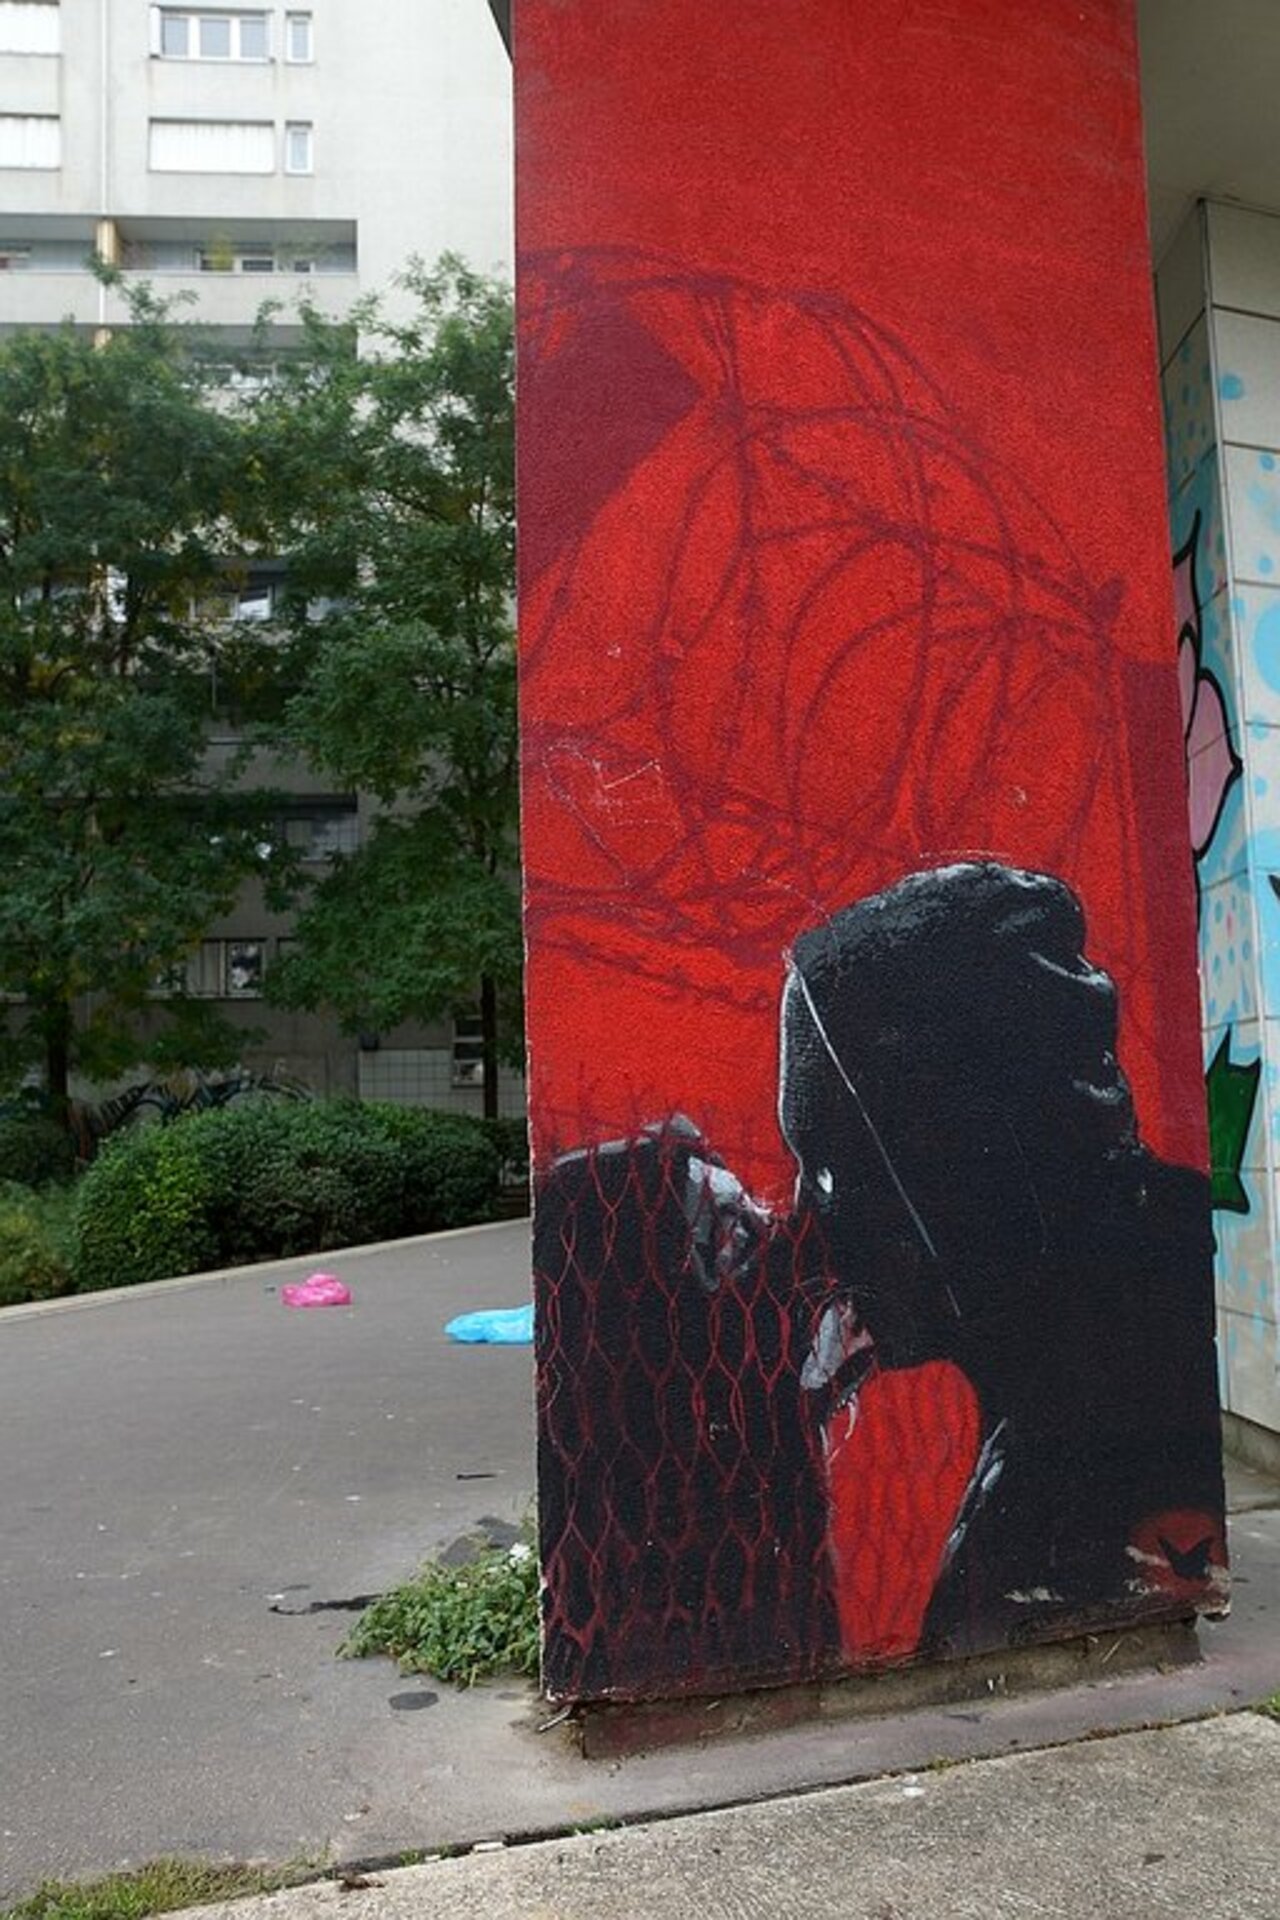 Street Art by anonymous in #Vitry-sur-Seine http://www.urbacolors.com #art #mural #graffiti #streetart https://t.co/DKPOJd2aYp